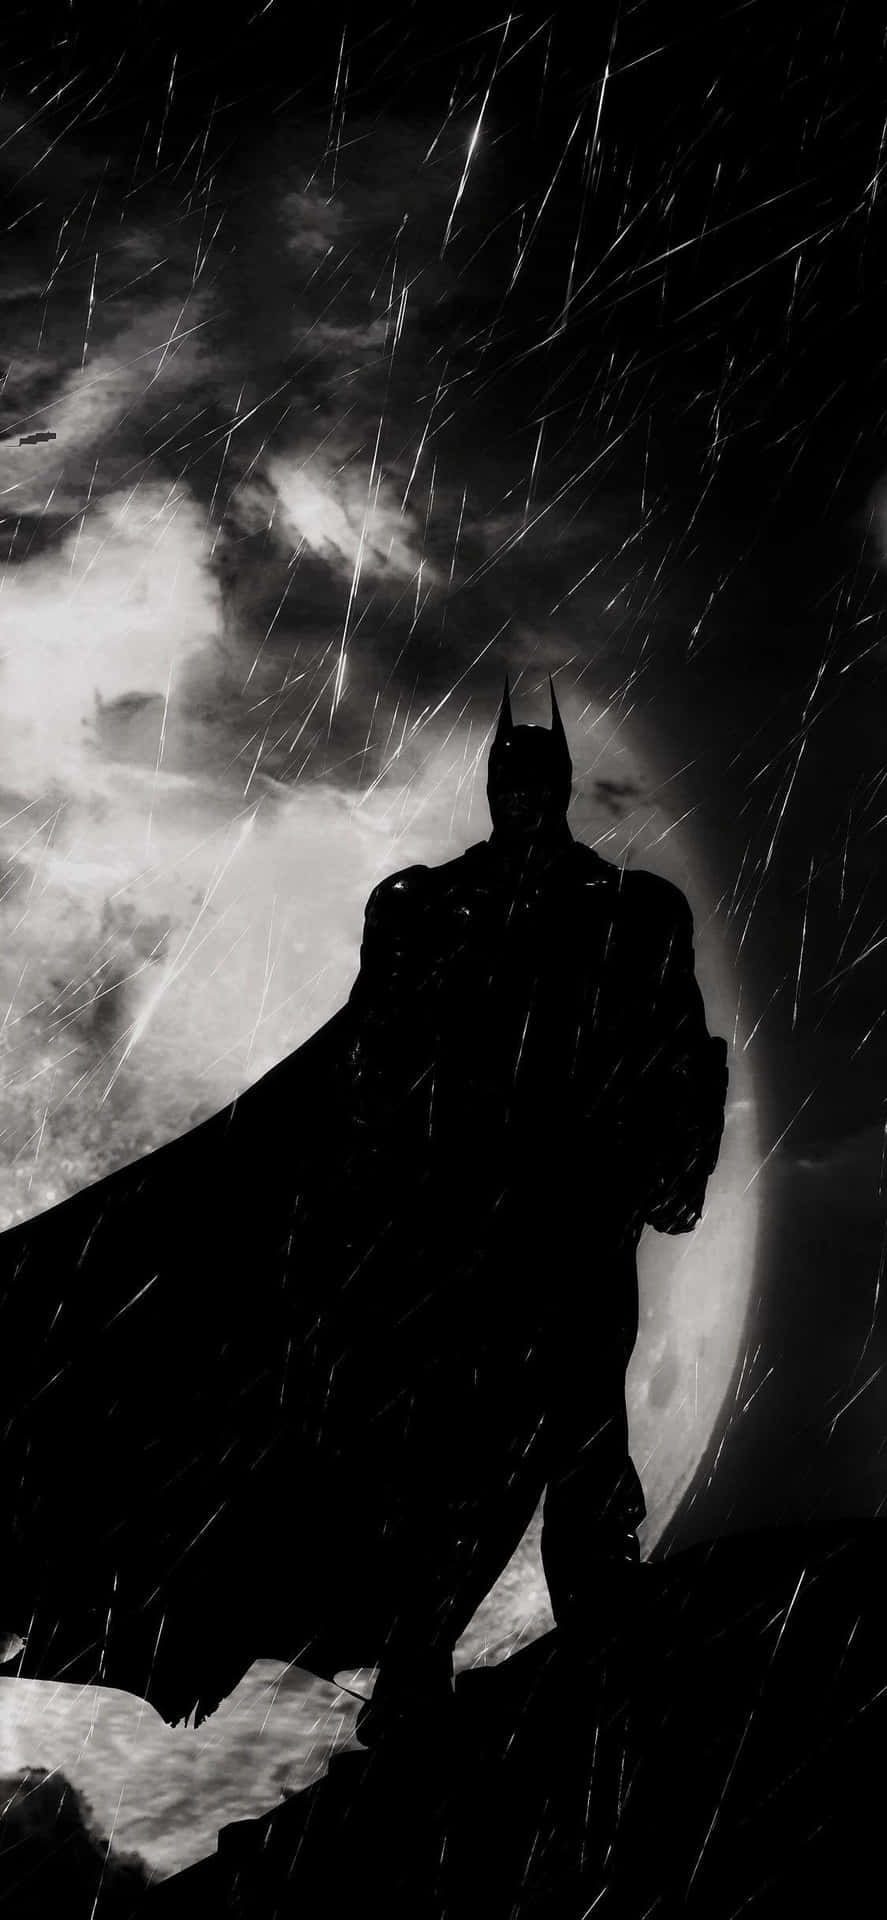 Batman standing tall in Gotham City - Arkham Knight Wallpaper